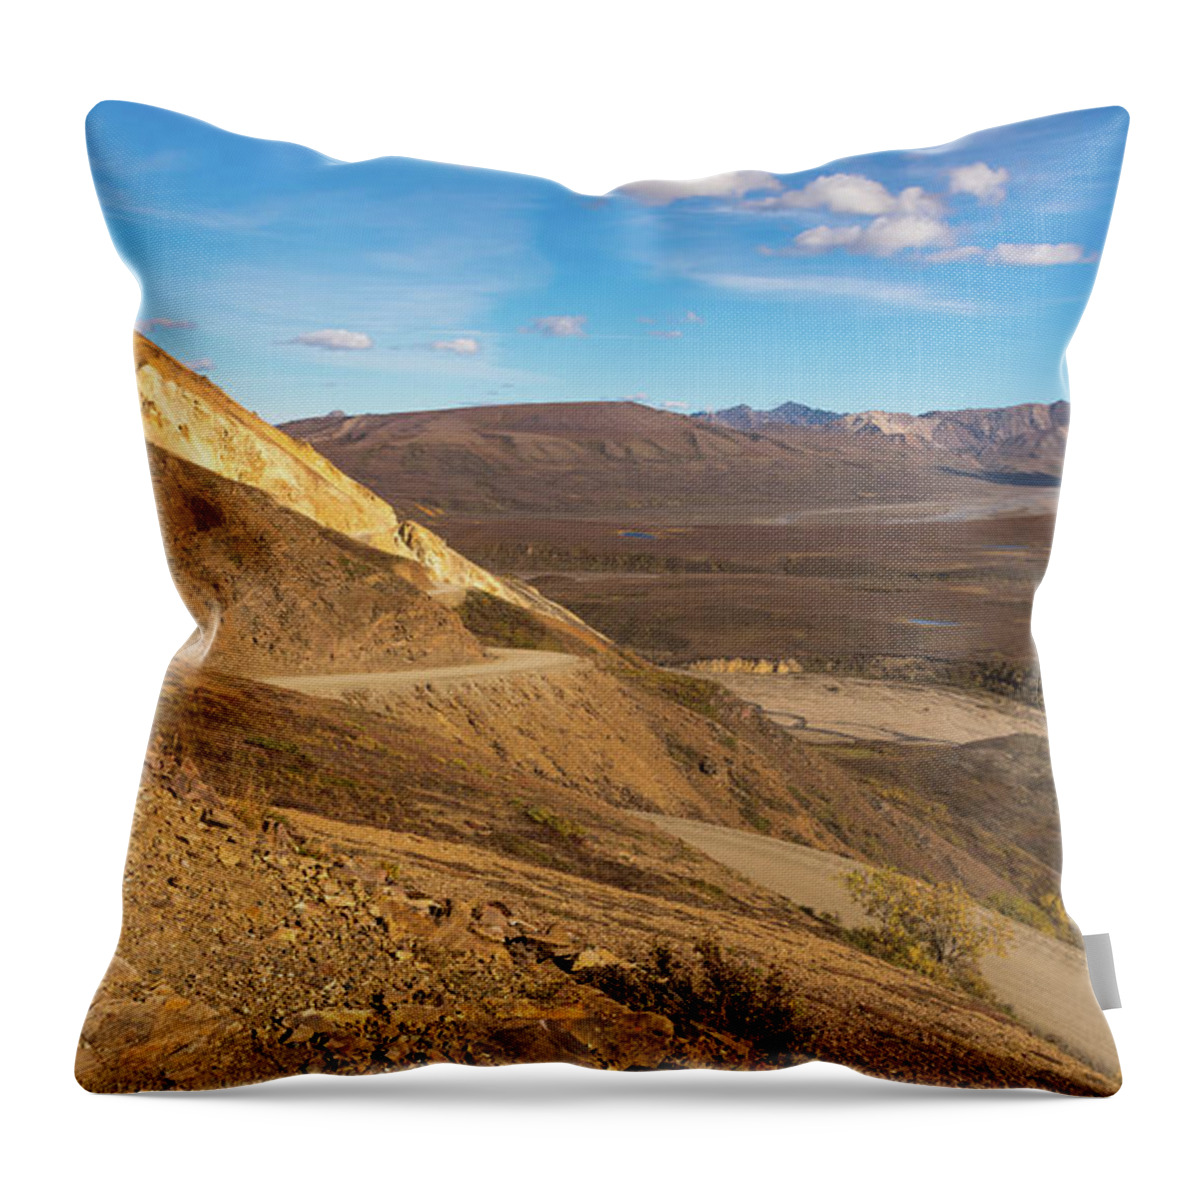 Alaska Throw Pillow featuring the photograph Denali National Park by Brenda Jacobs